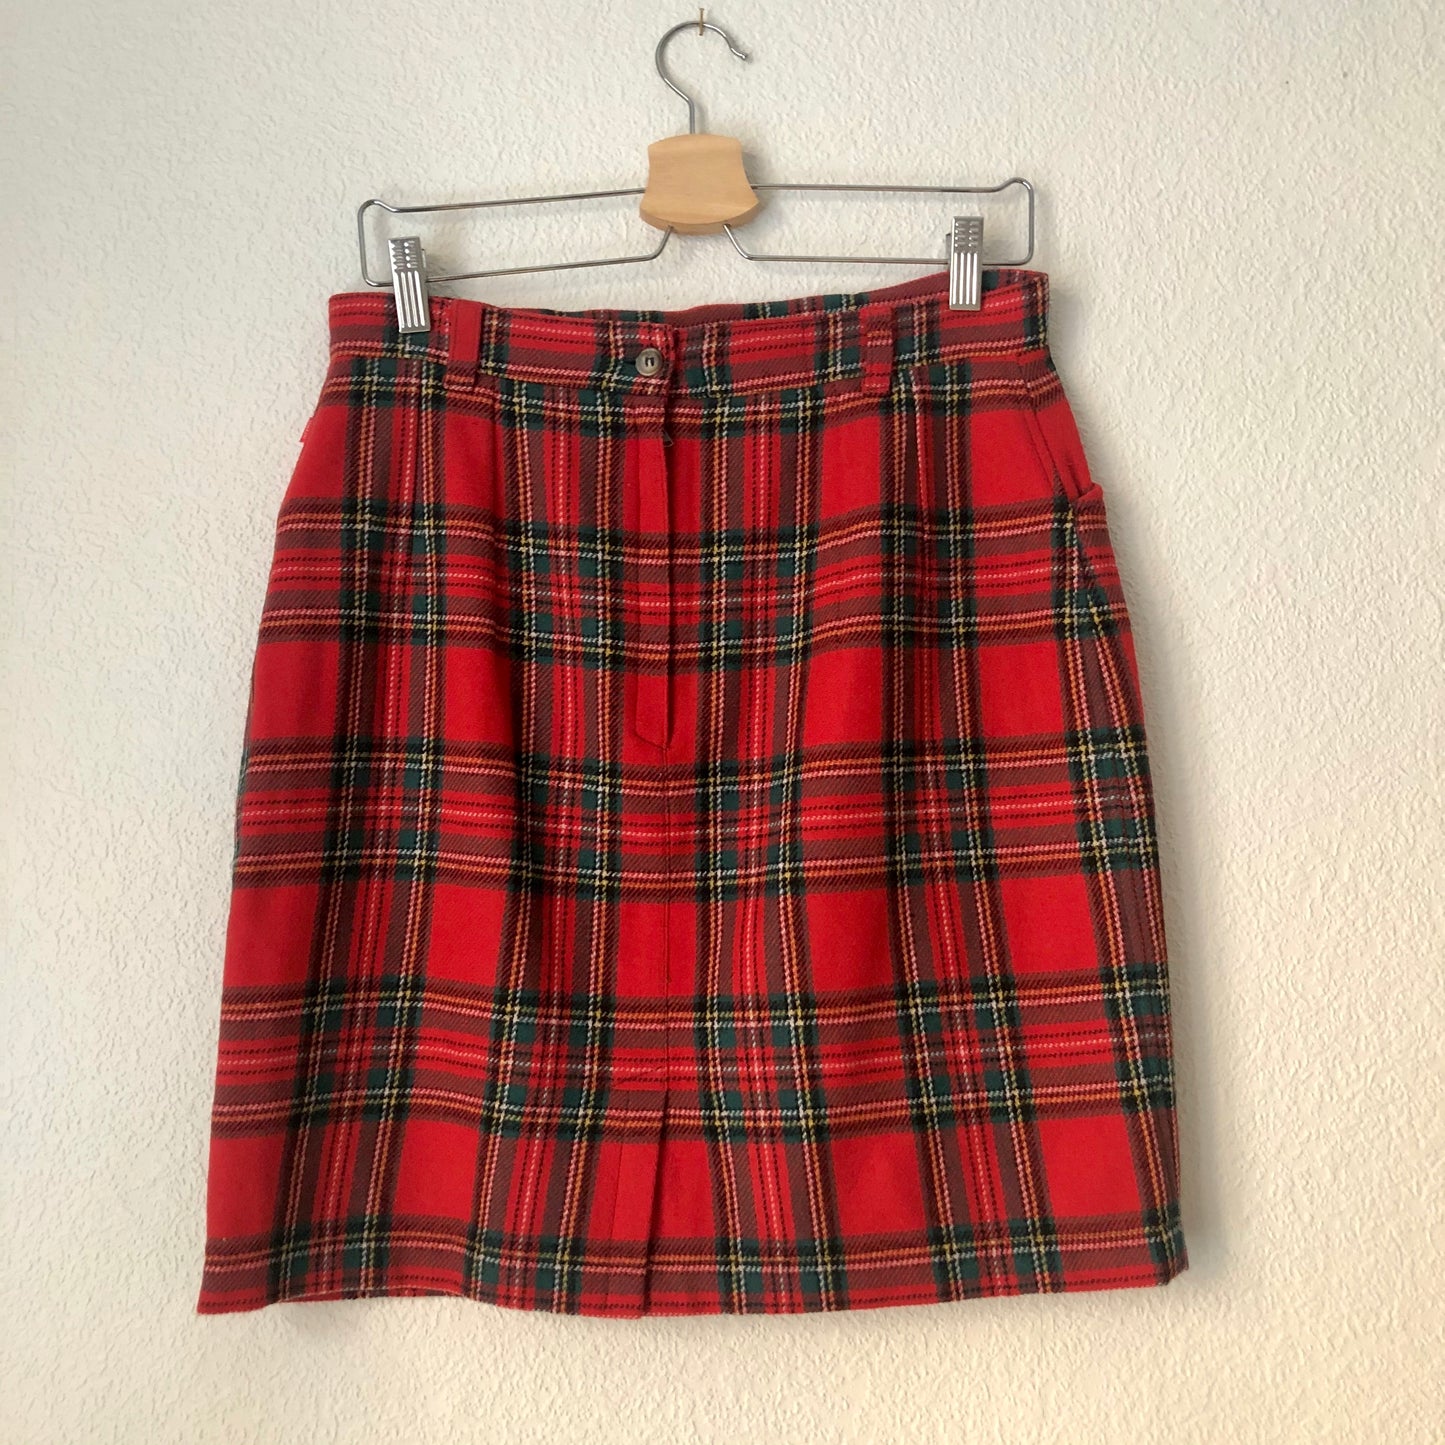 Vintage Red Plaid Wool Skirt